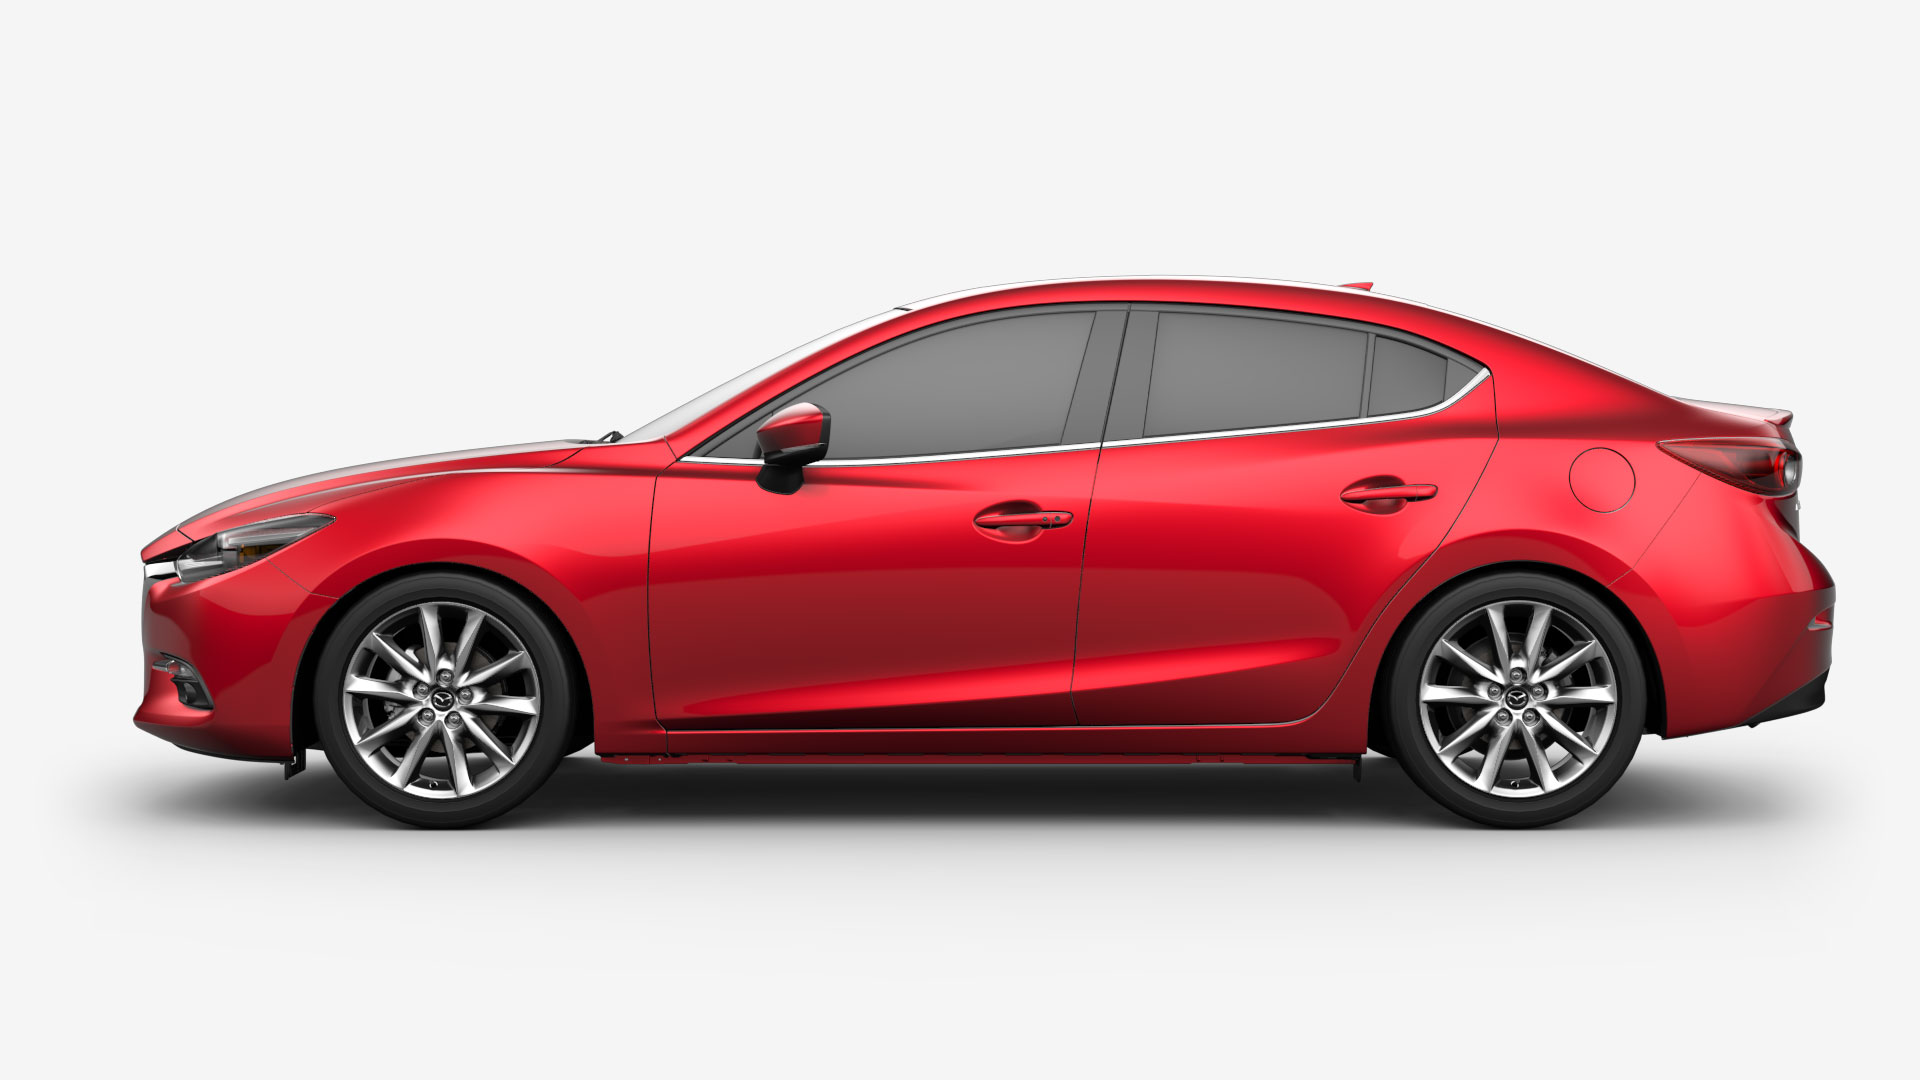 2018 Mazda 3 Sedan - Fuel Efficient Compact Car | Mazda USA